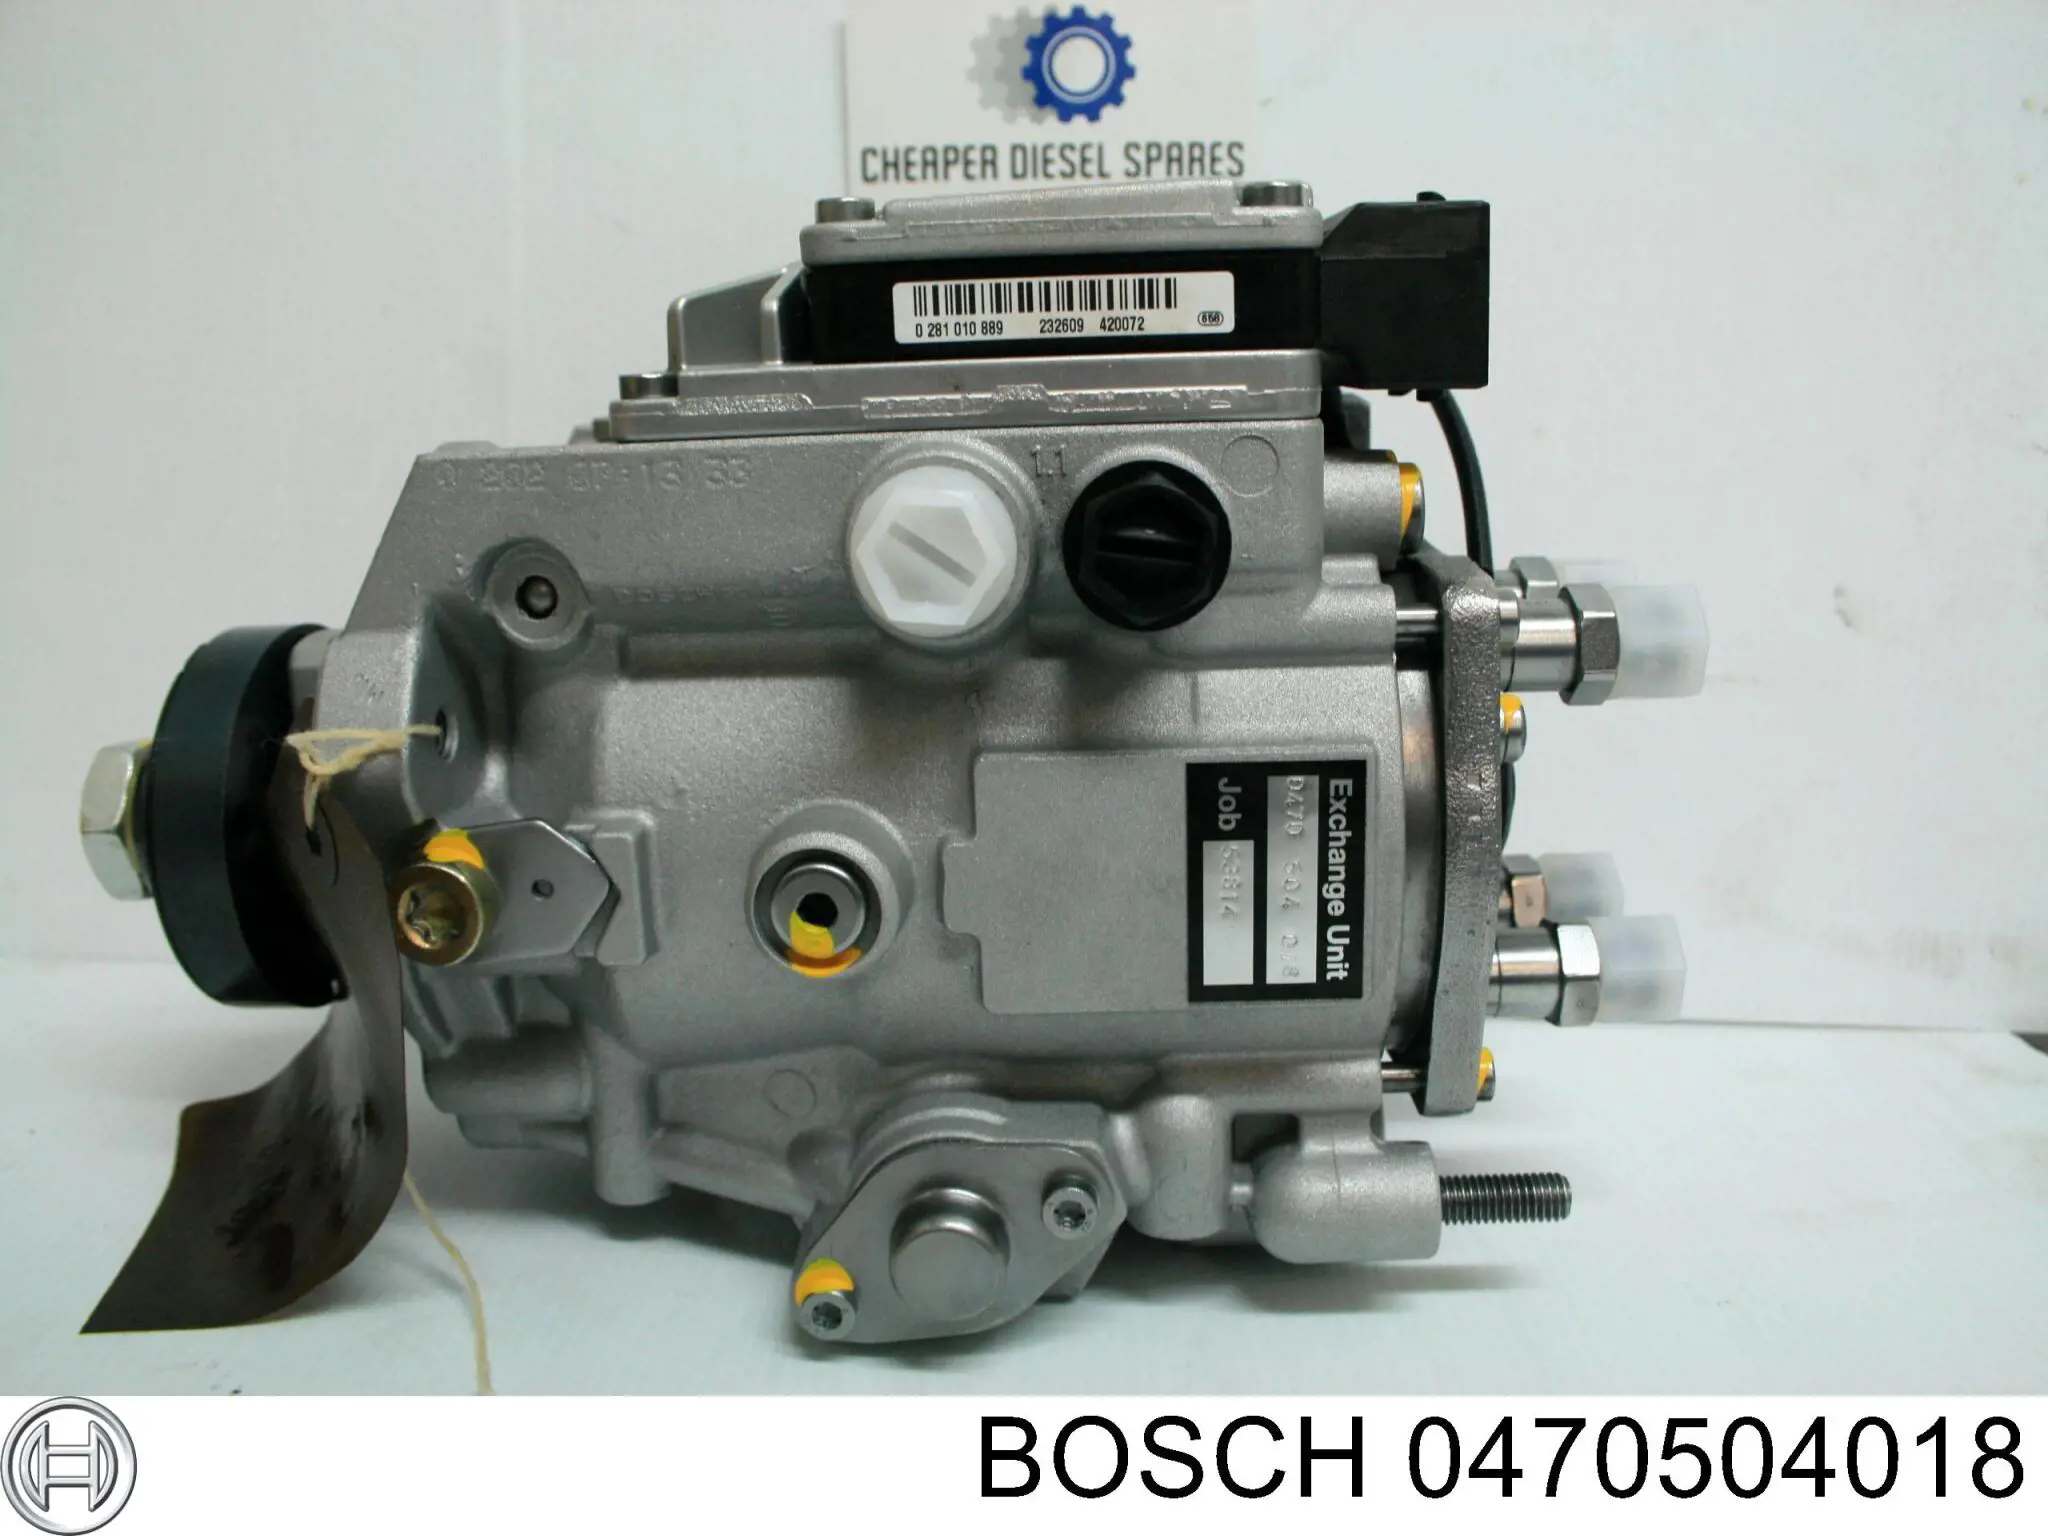 470504018 Bosch bomba inyectora